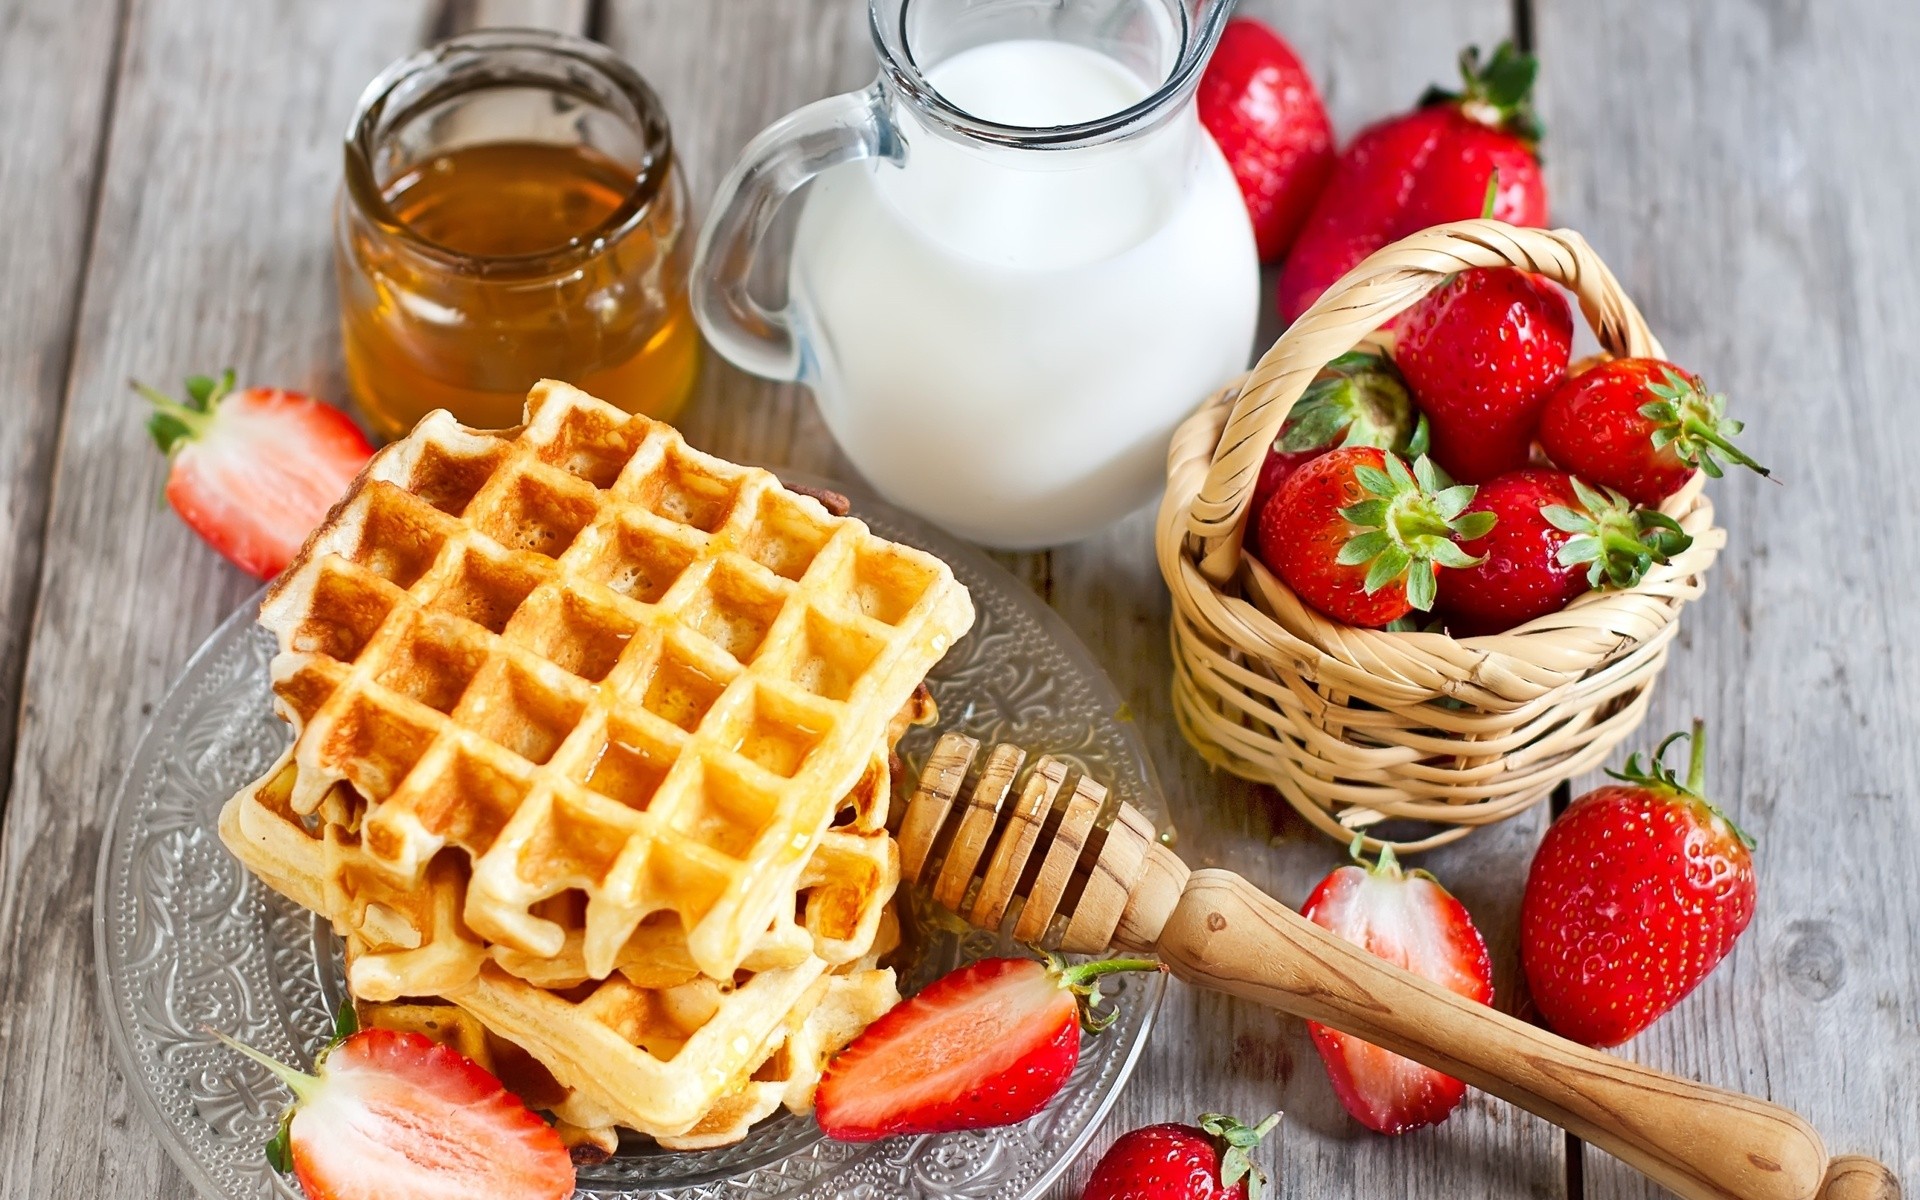 General 1920x1200 food colorful breakfast strawberries fruit honey milk wooden surface waffles sweets berries baskets